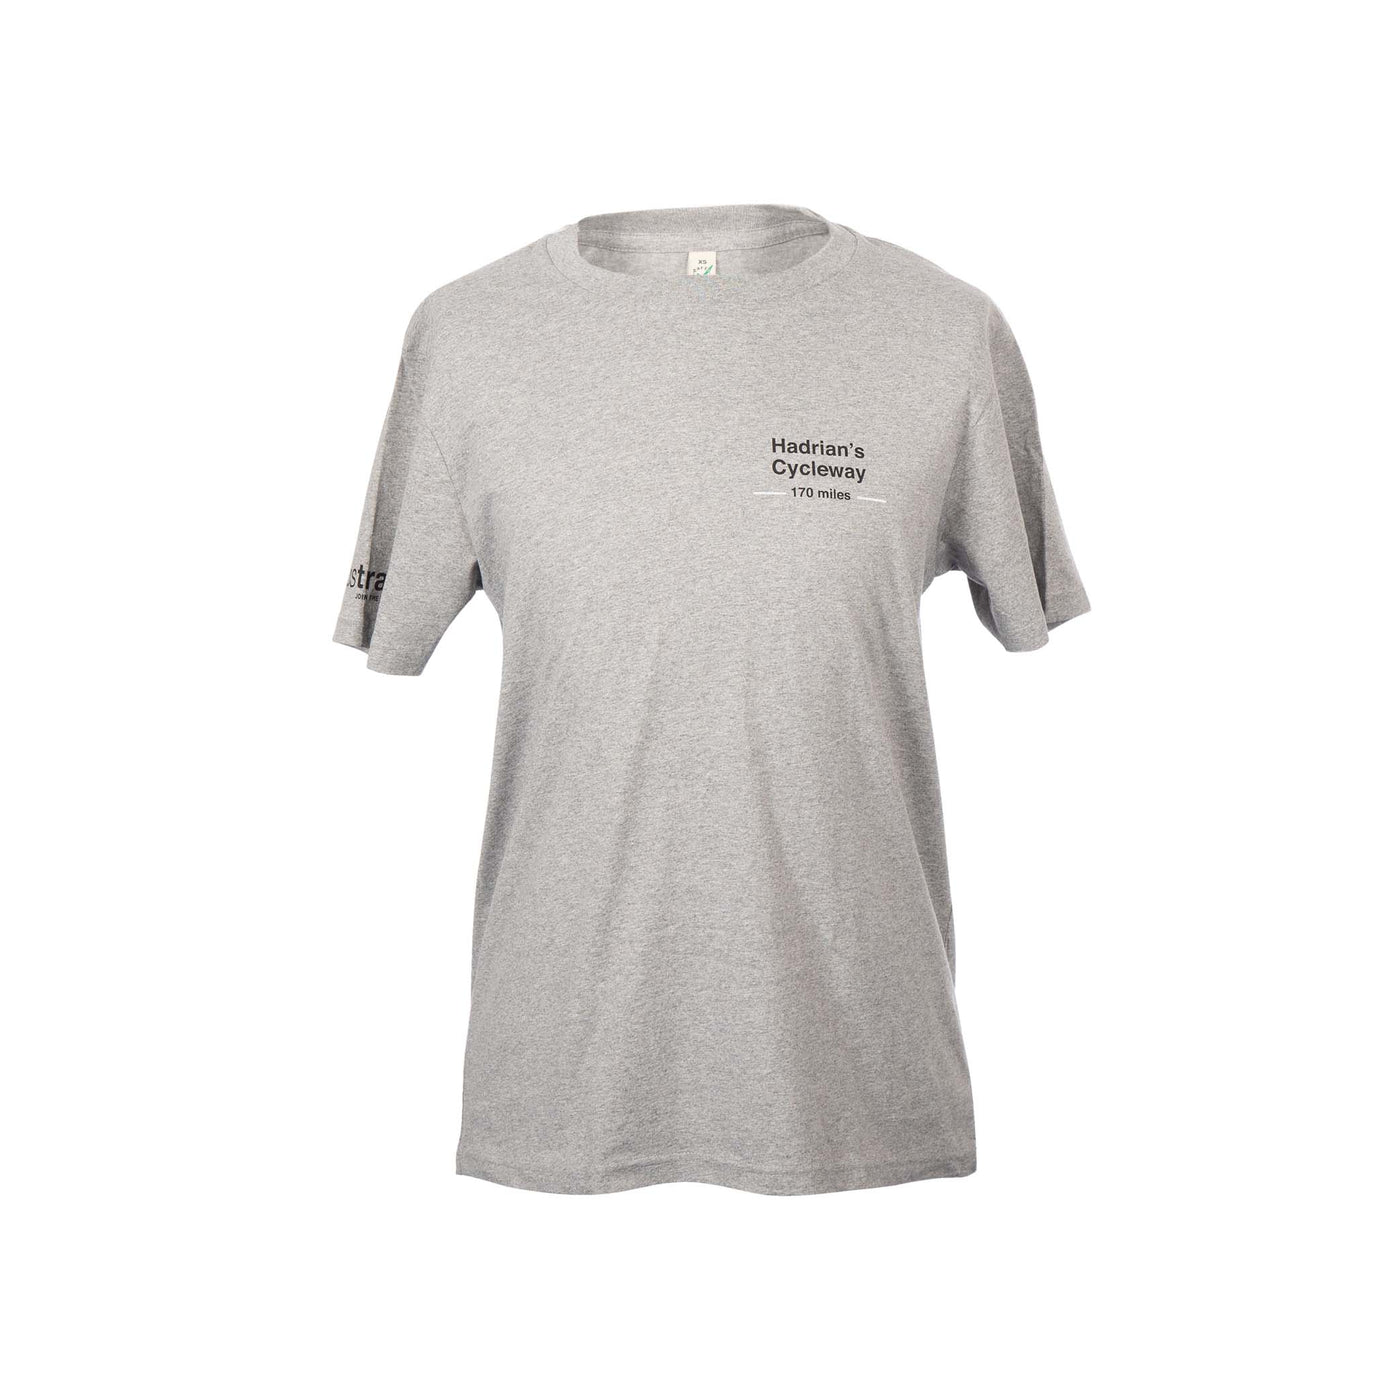 Hadrian's Cycleway t-shirt 